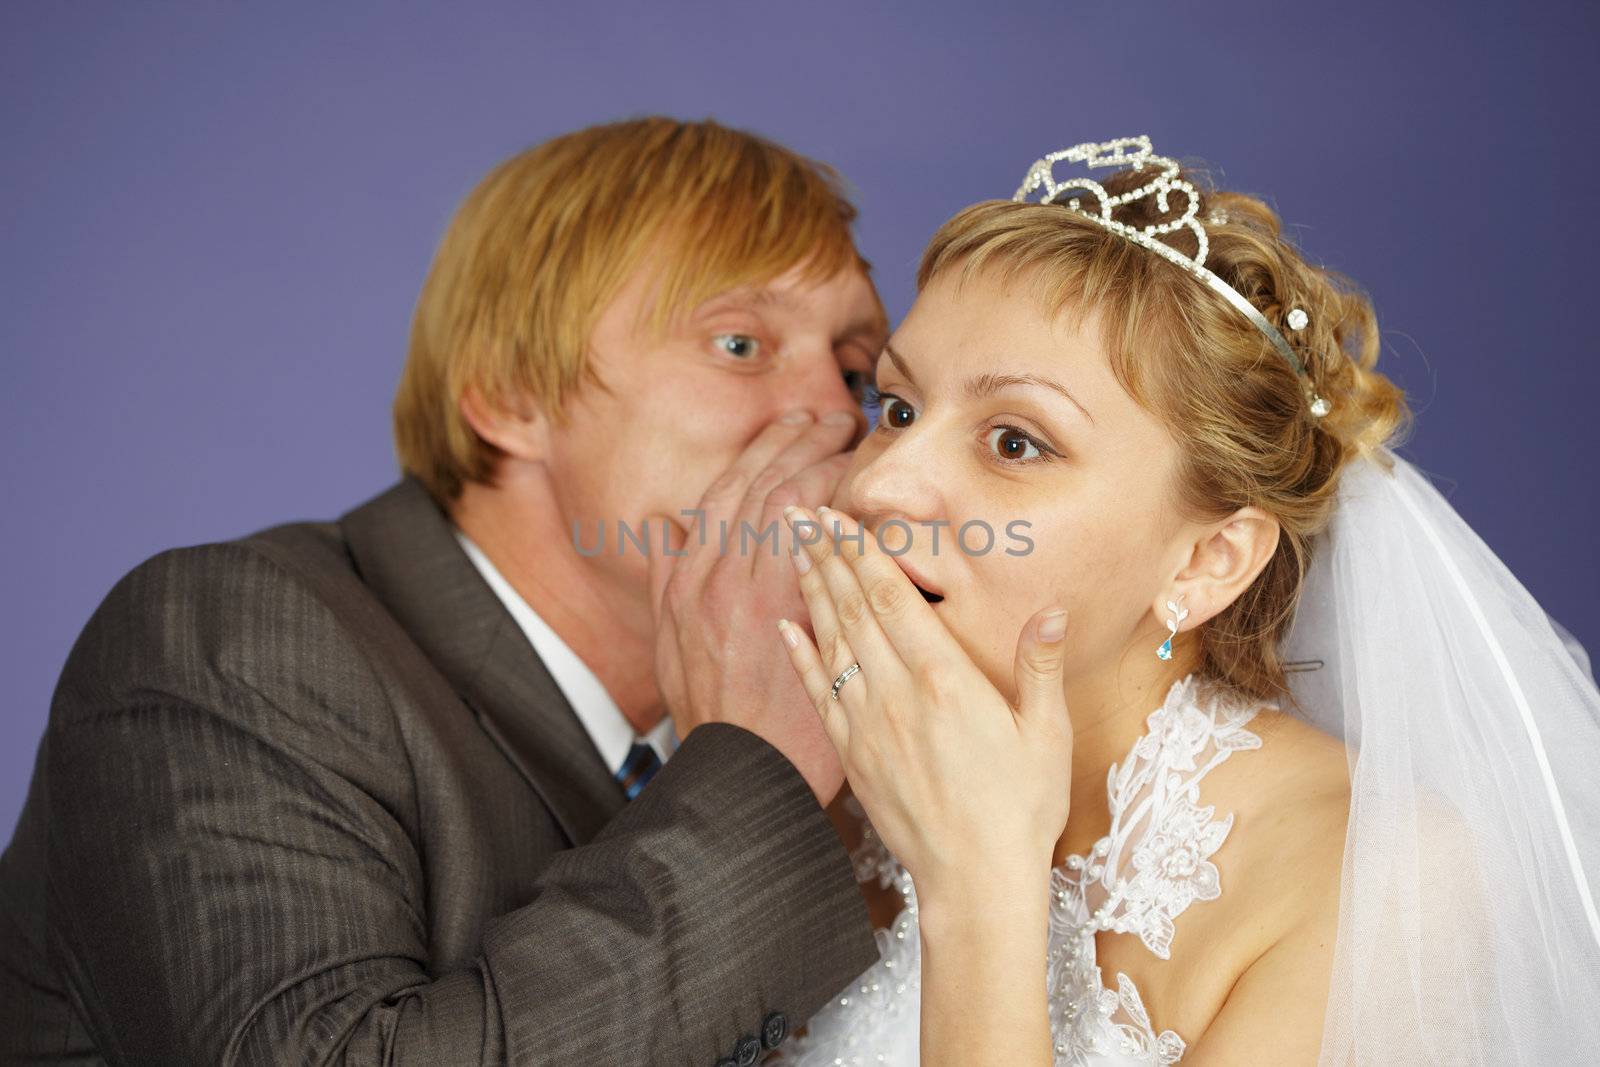 The groom tells the bride amazing news